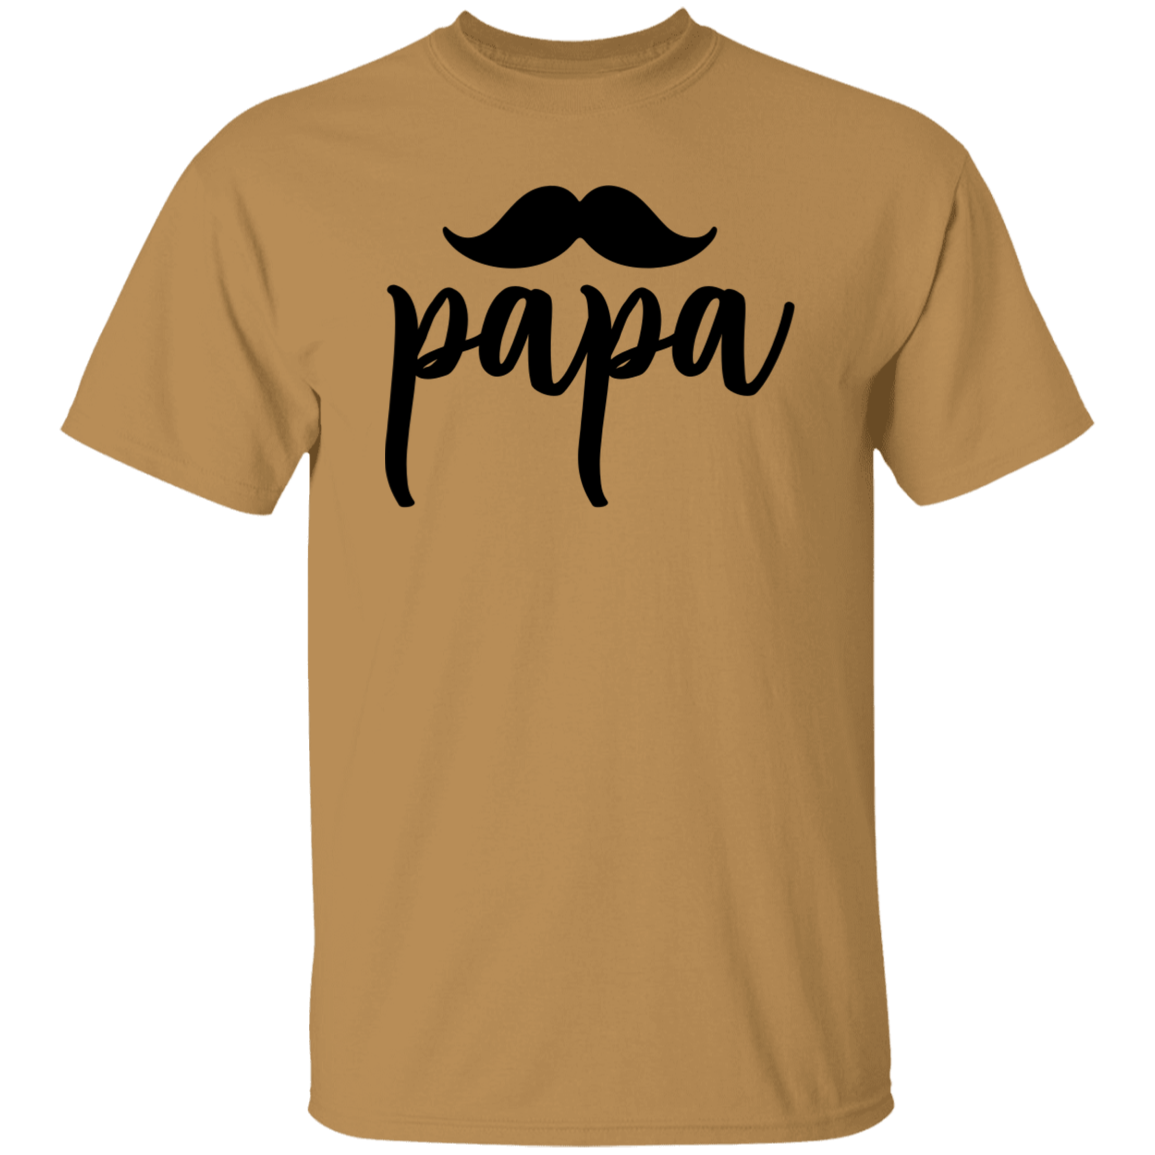 Papa 5.3 oz. T-Shirt